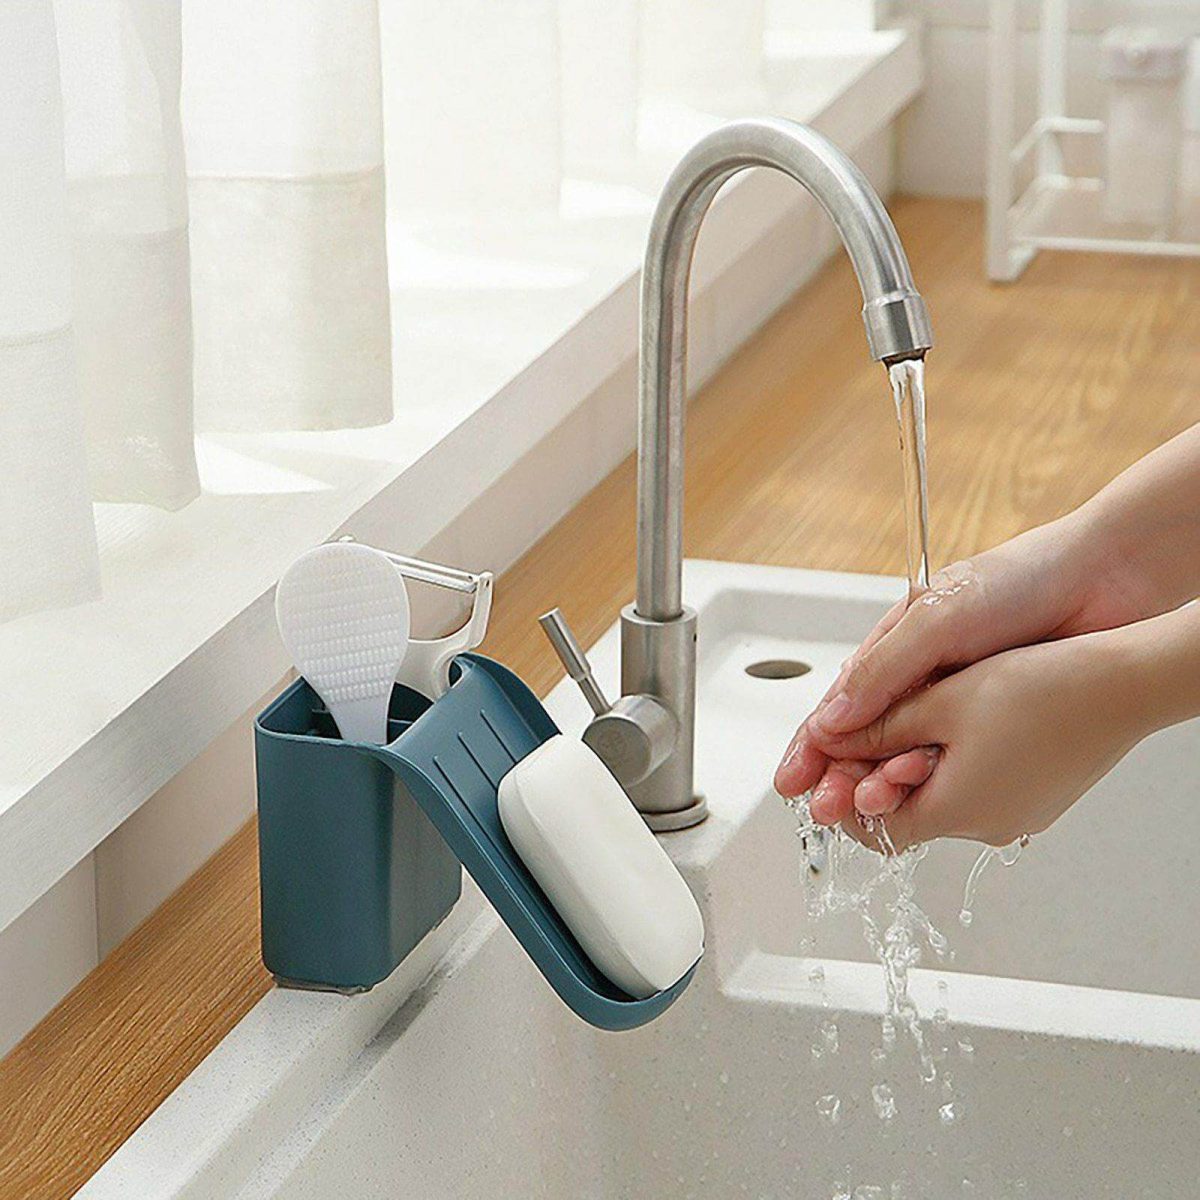 Multifunctional Smart Suction Soap Holder Rack - MaviGadget